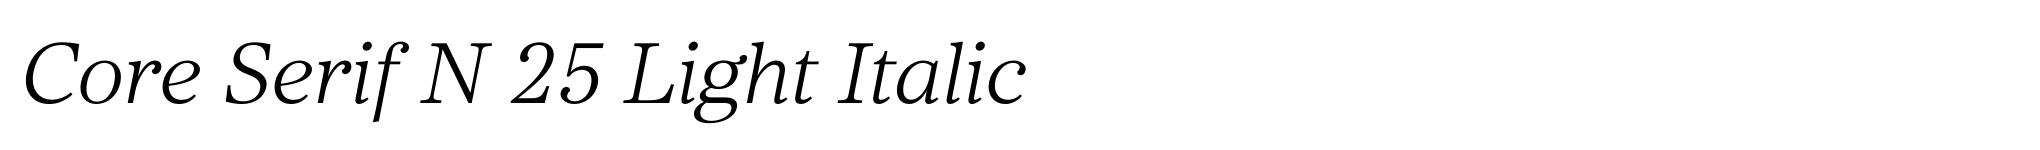 Core Serif N 25 Light Italic image